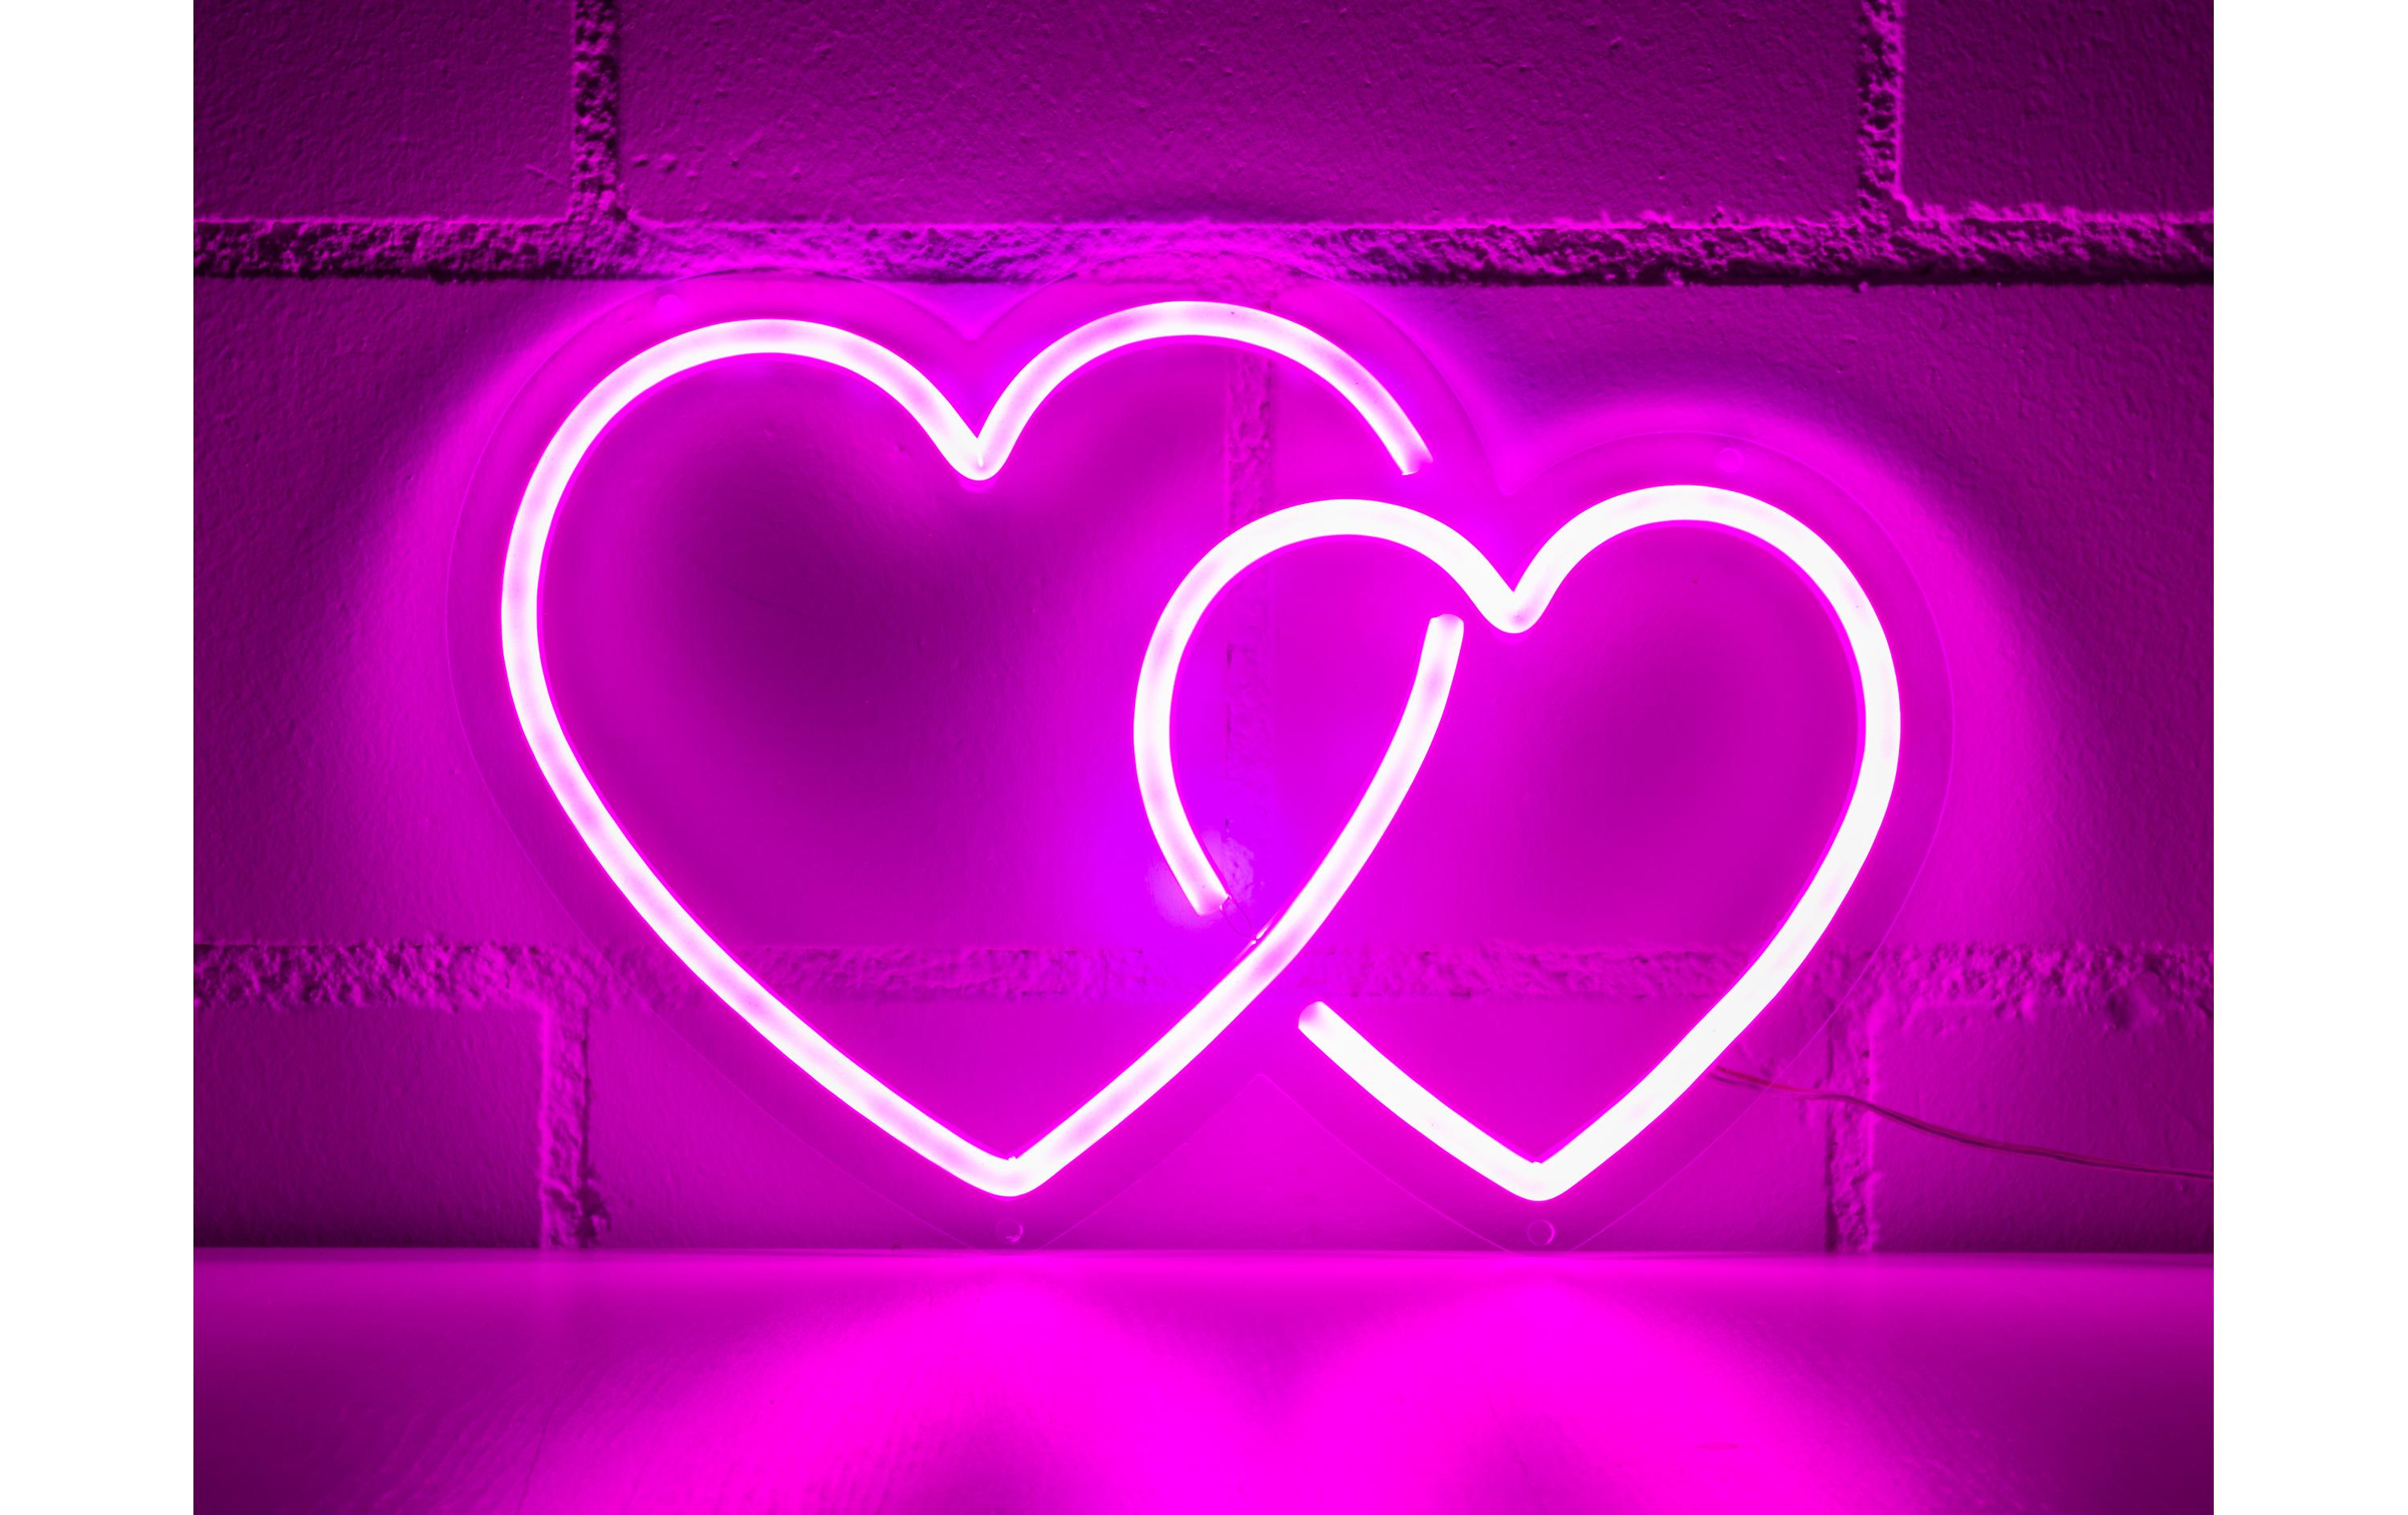 Vegas Lights LED Dekolicht Neonschild Zwei Herzen 30 x 20.5 cm